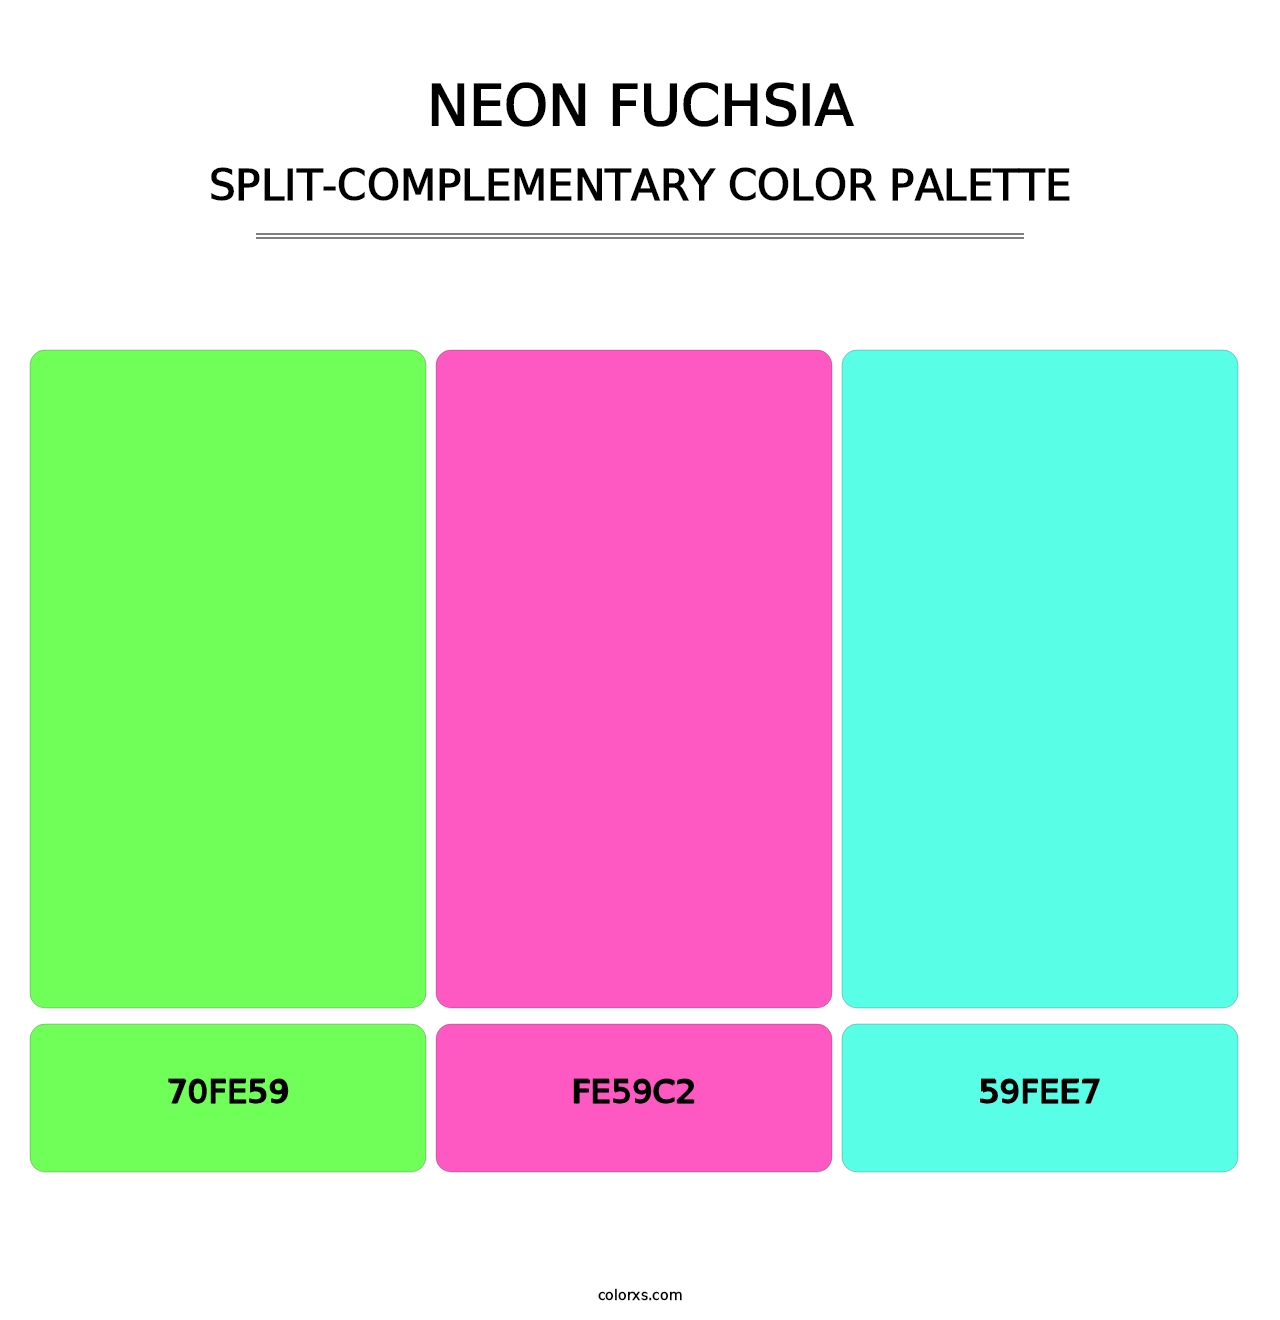 Neon Fuchsia - Split-Complementary Color Palette